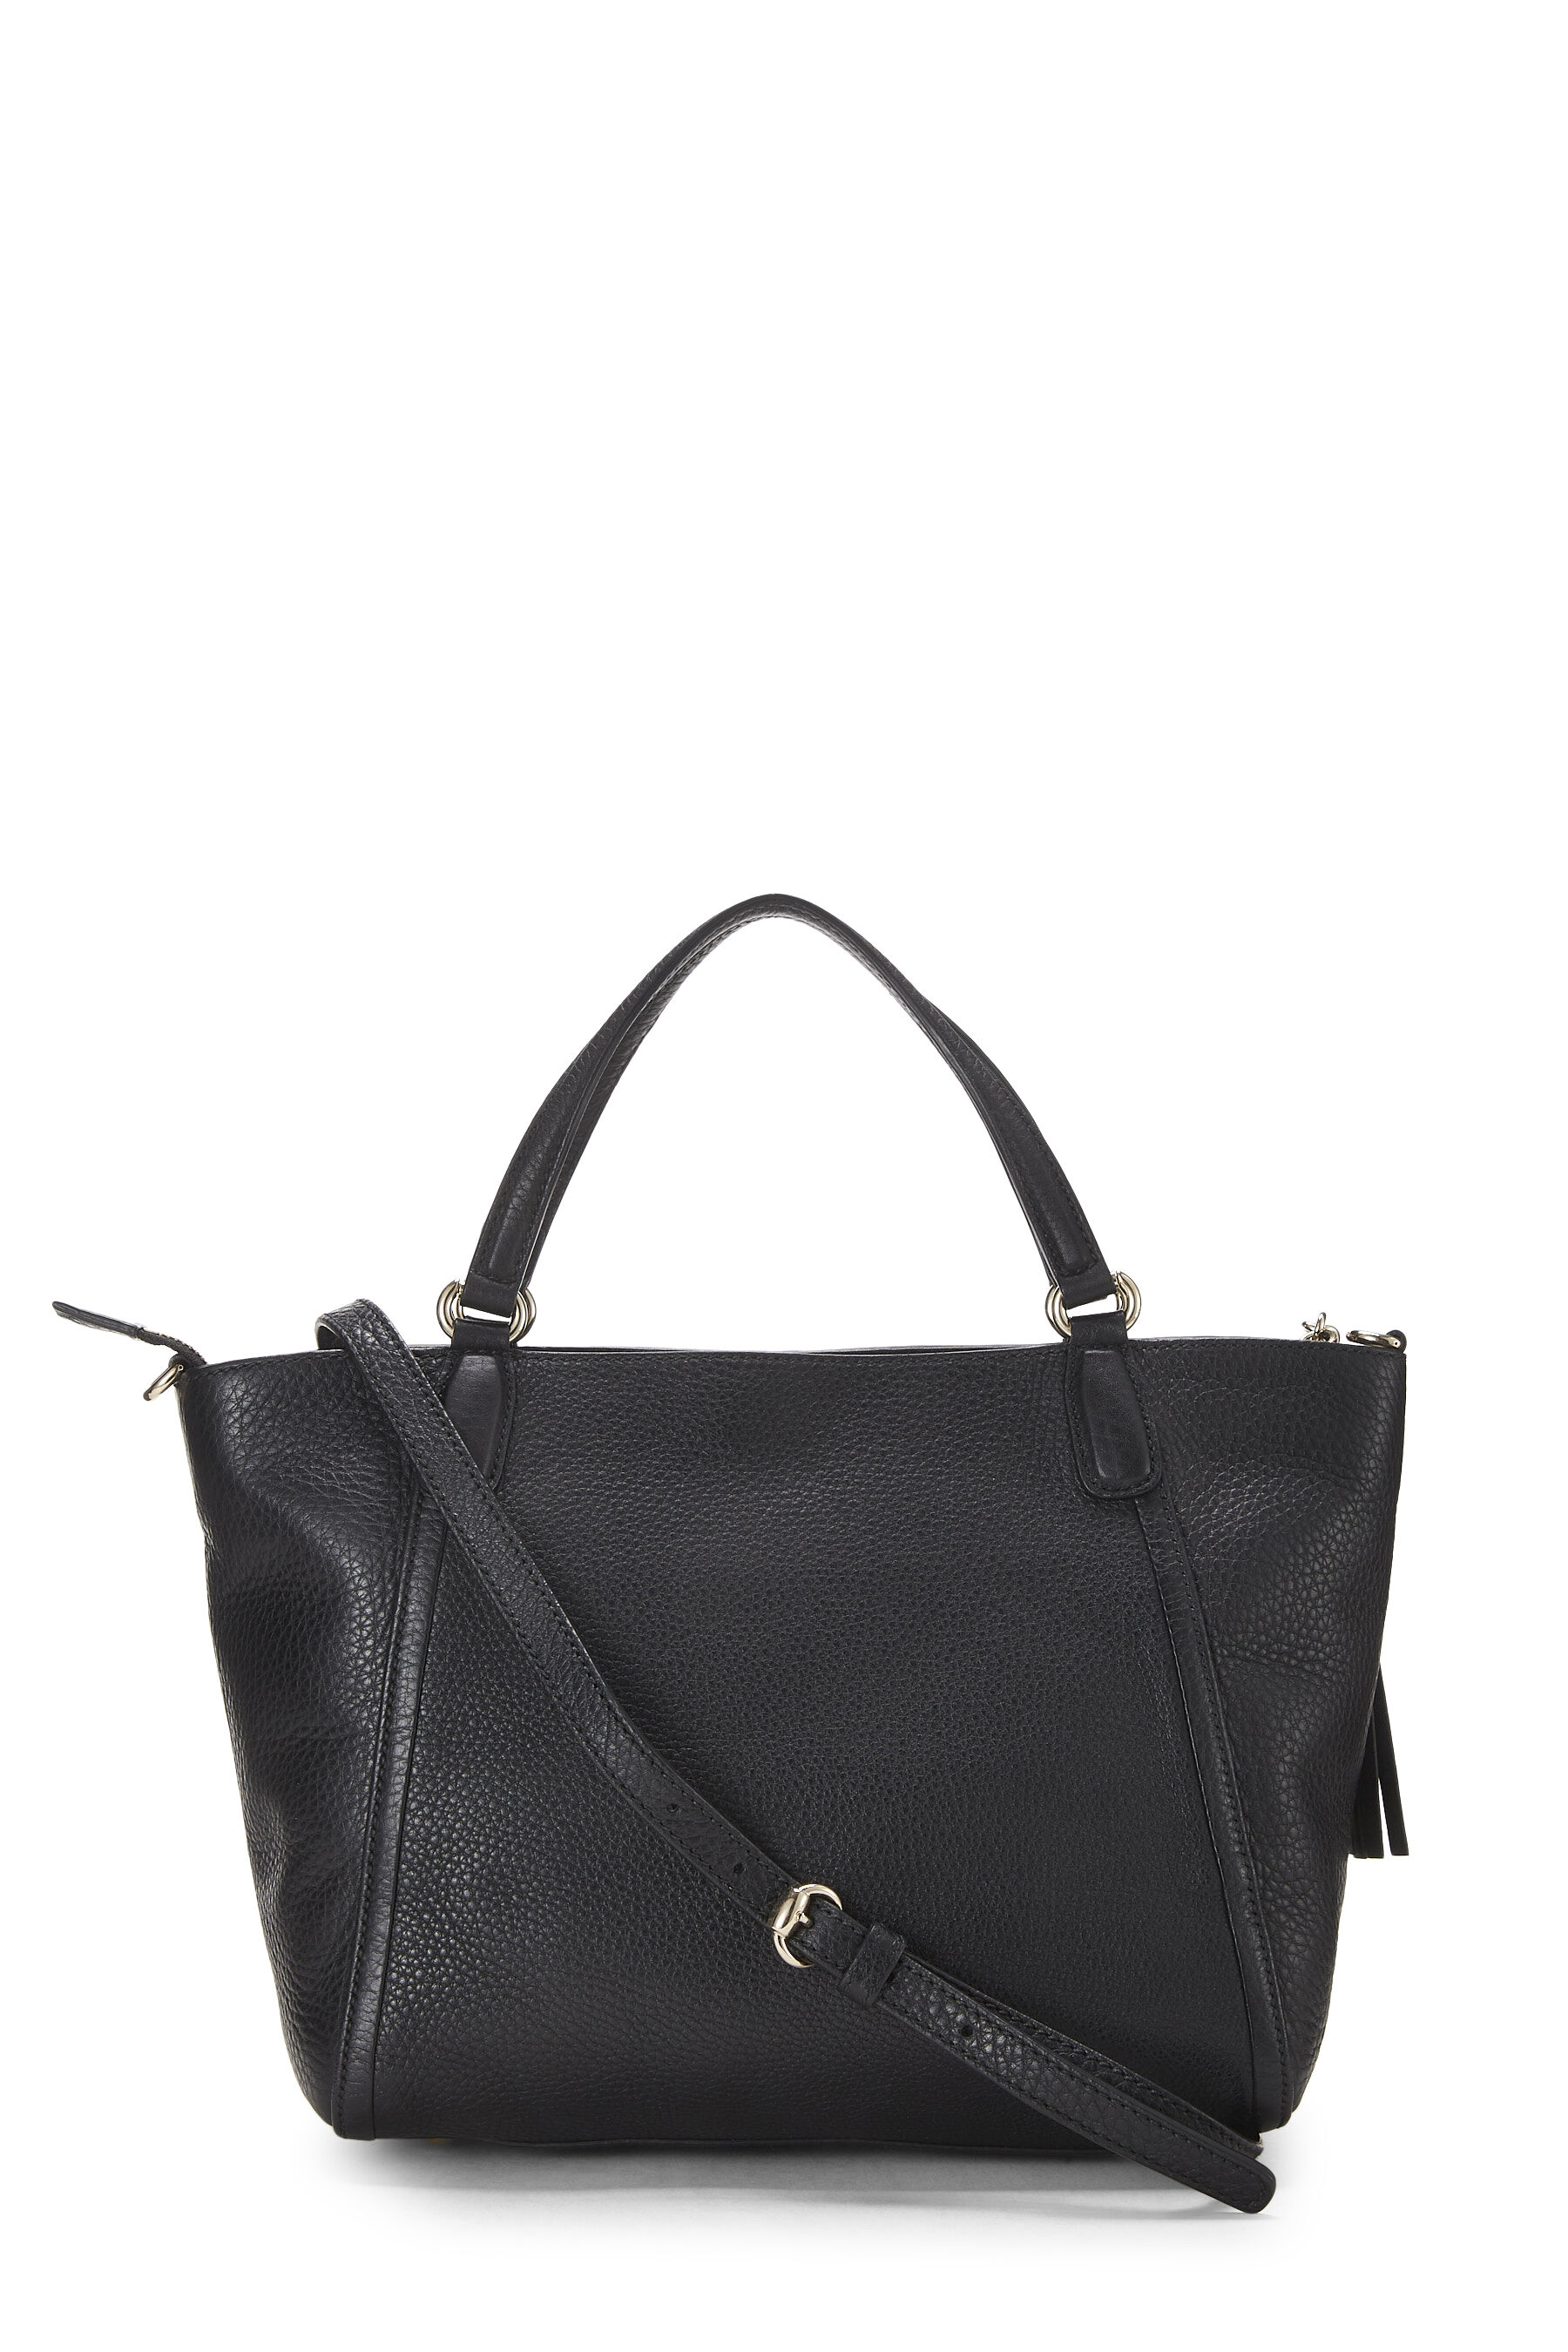 Black Grained Leather Soho Top Handle Bag